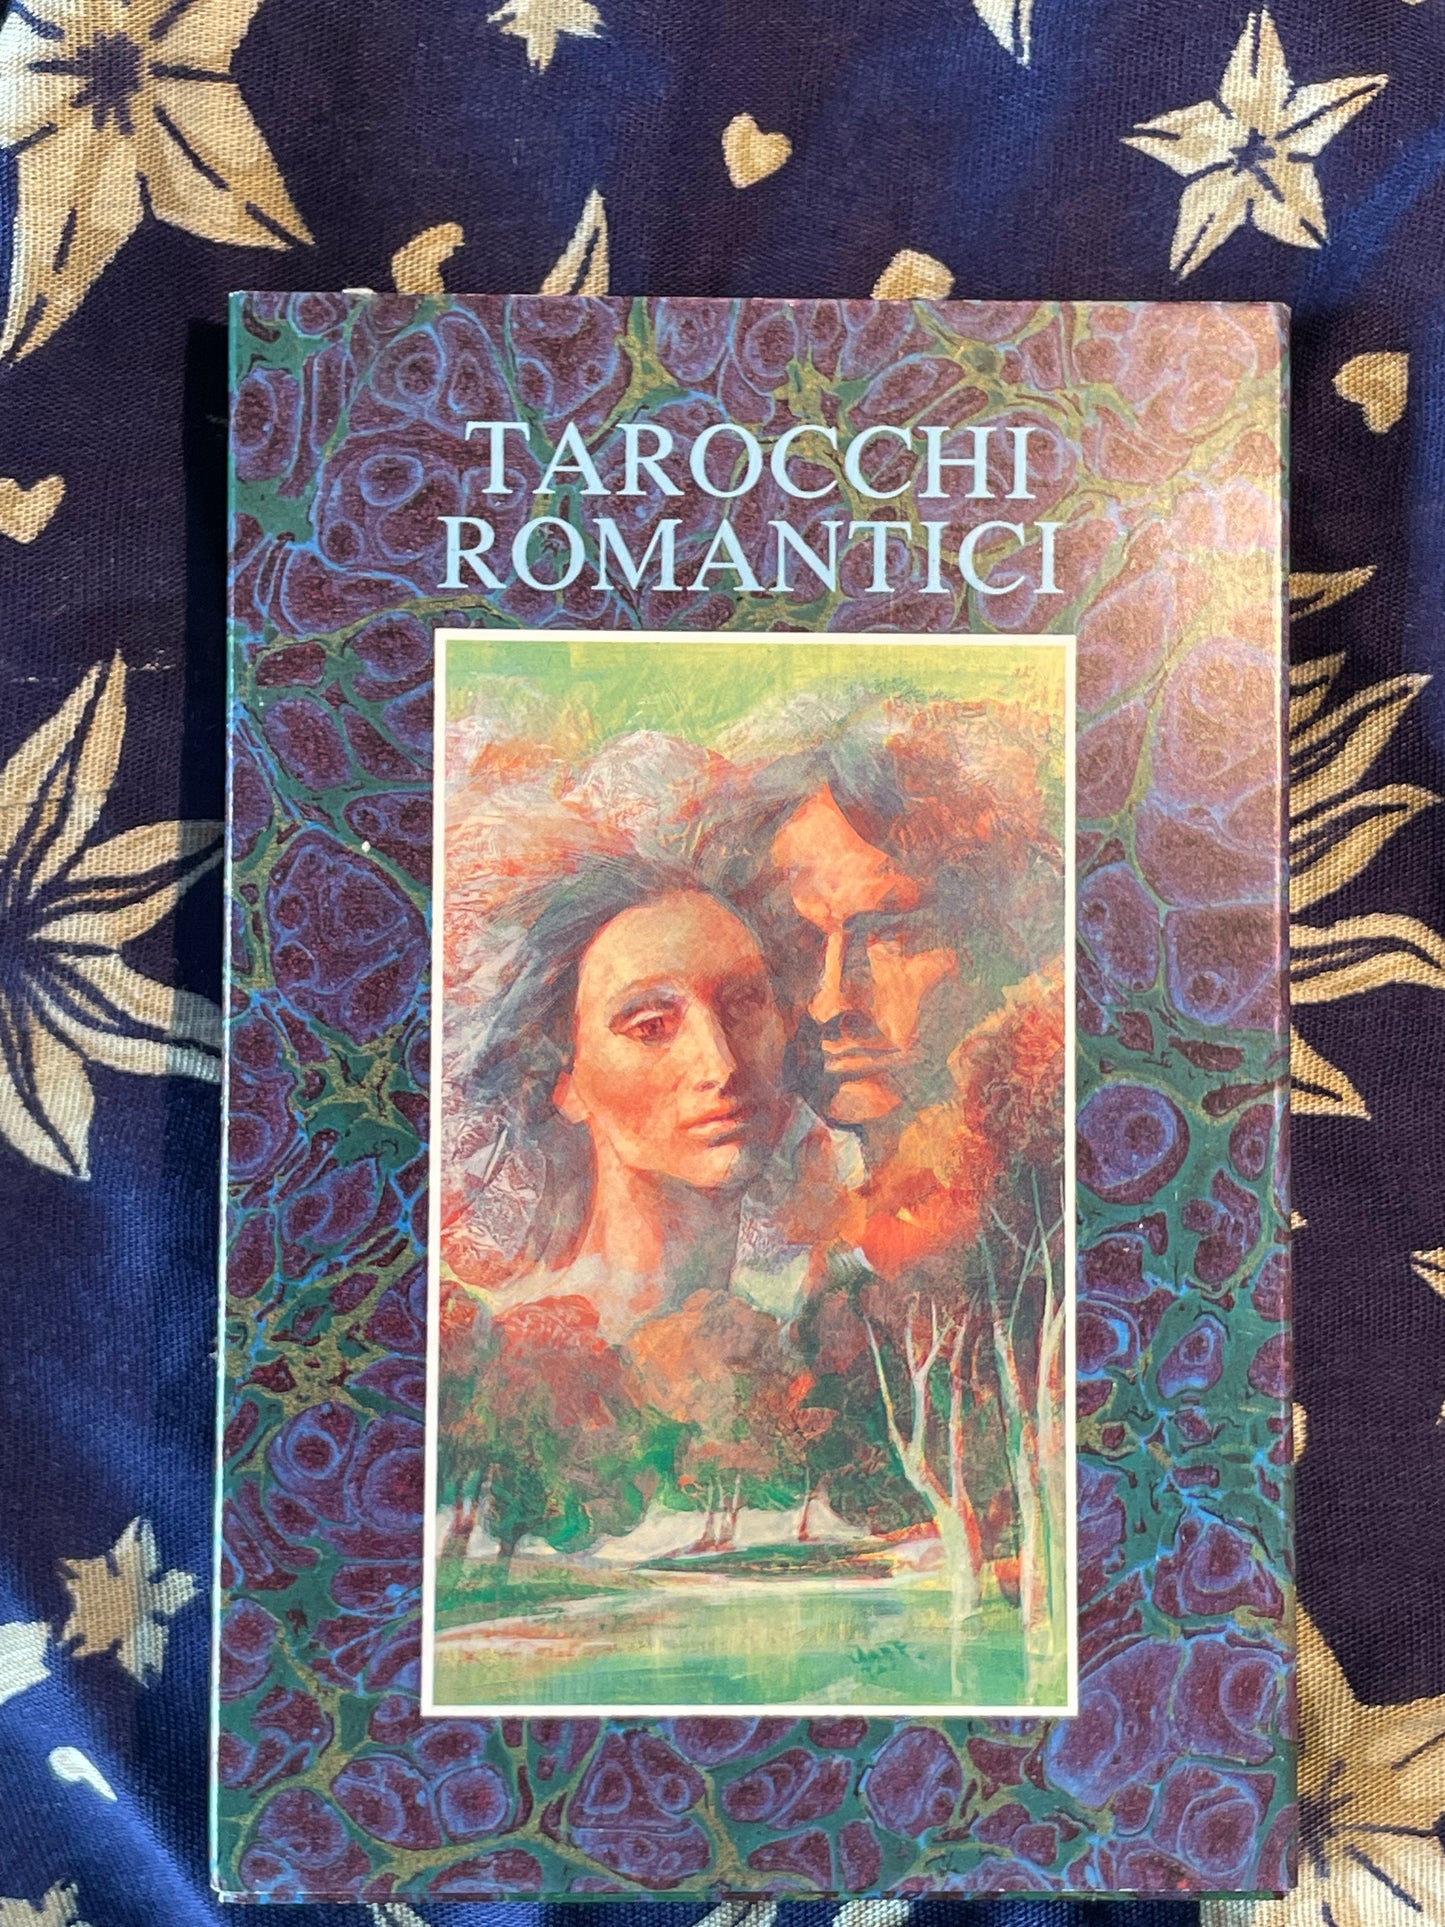 Vintage Tarot “Tarocchi Romantici”